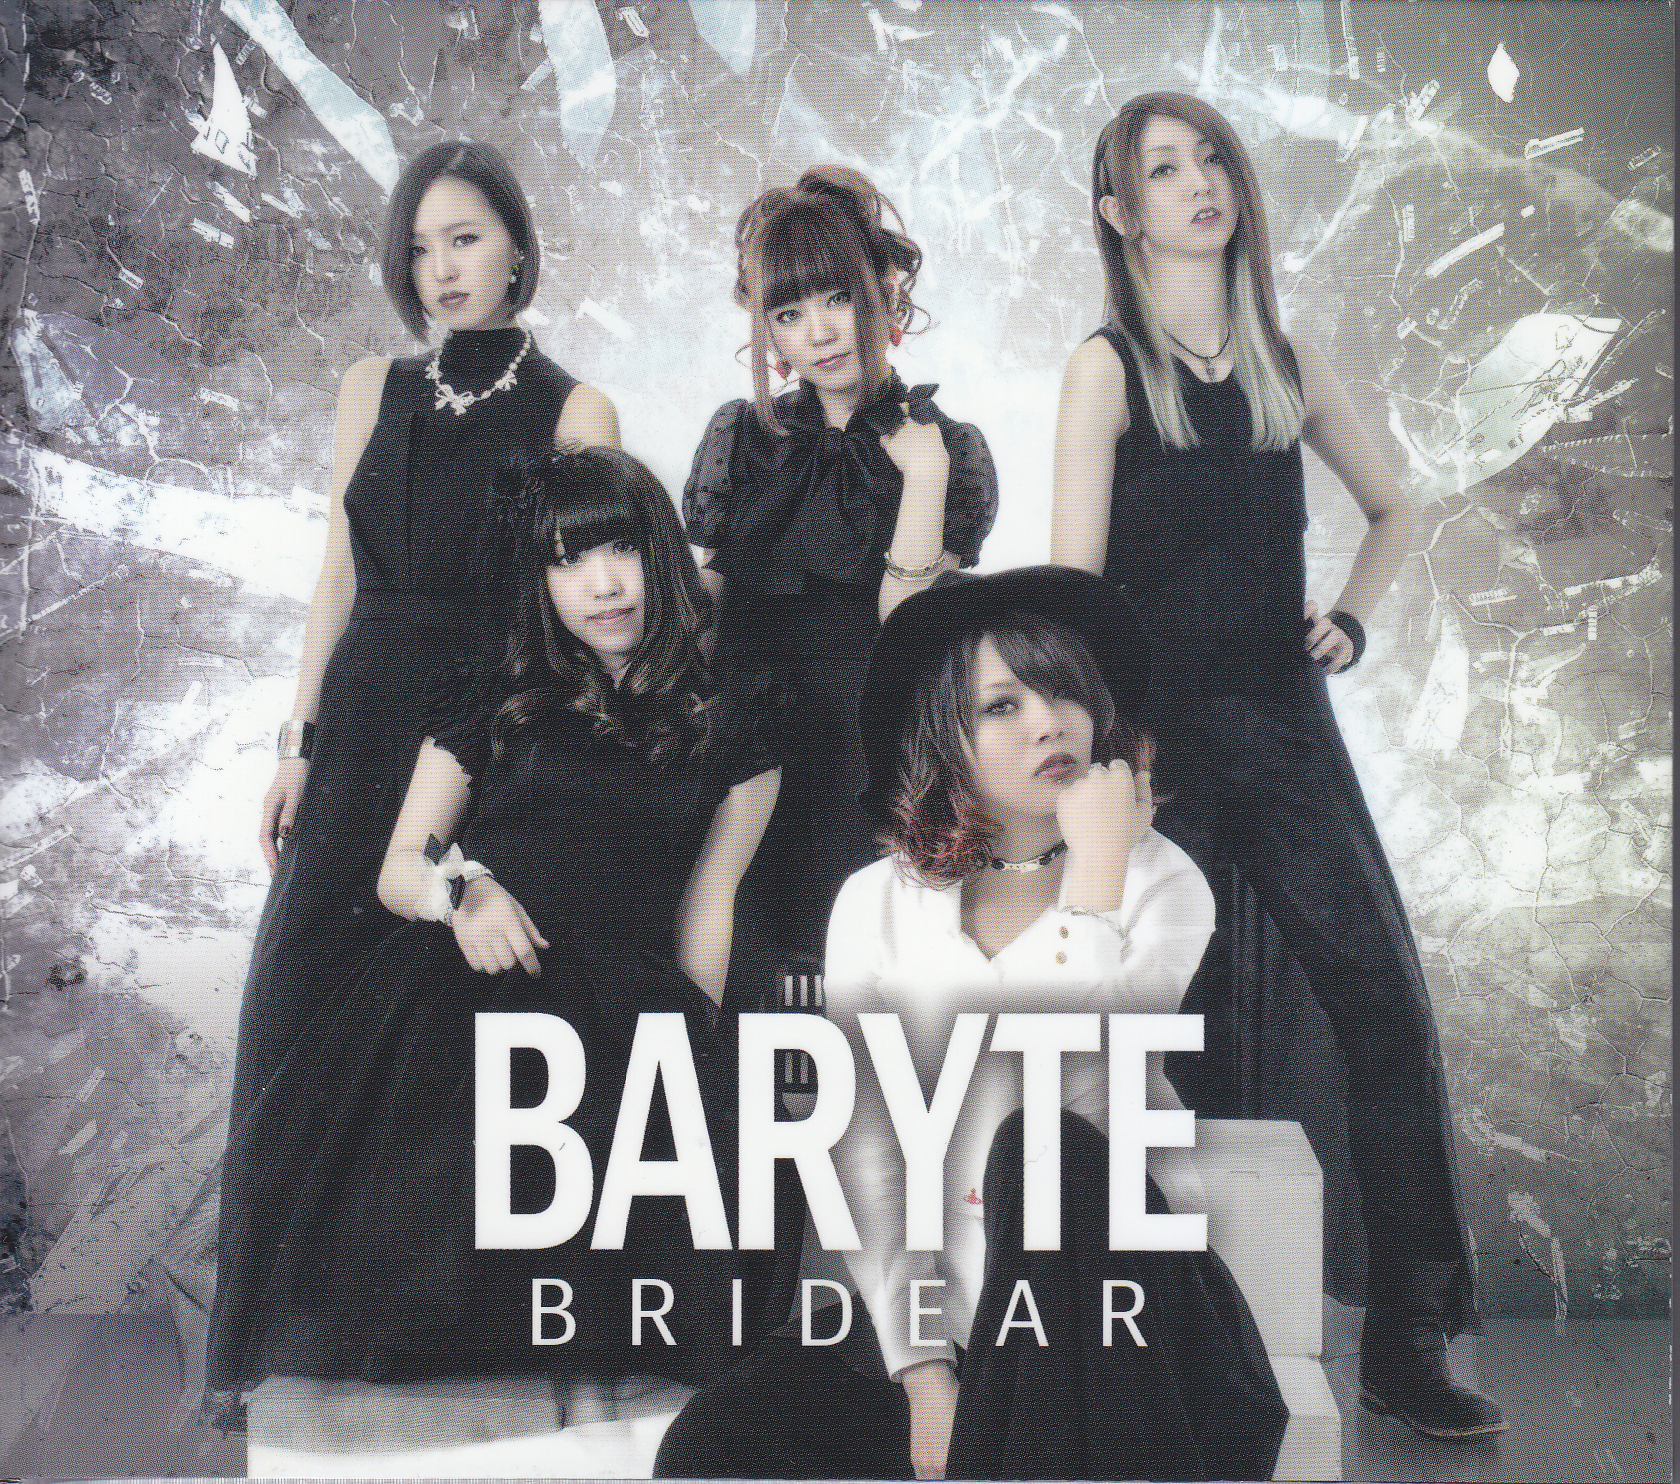 Bridear ( ブライディア )  の CD 【初回限定盤】BARYTE